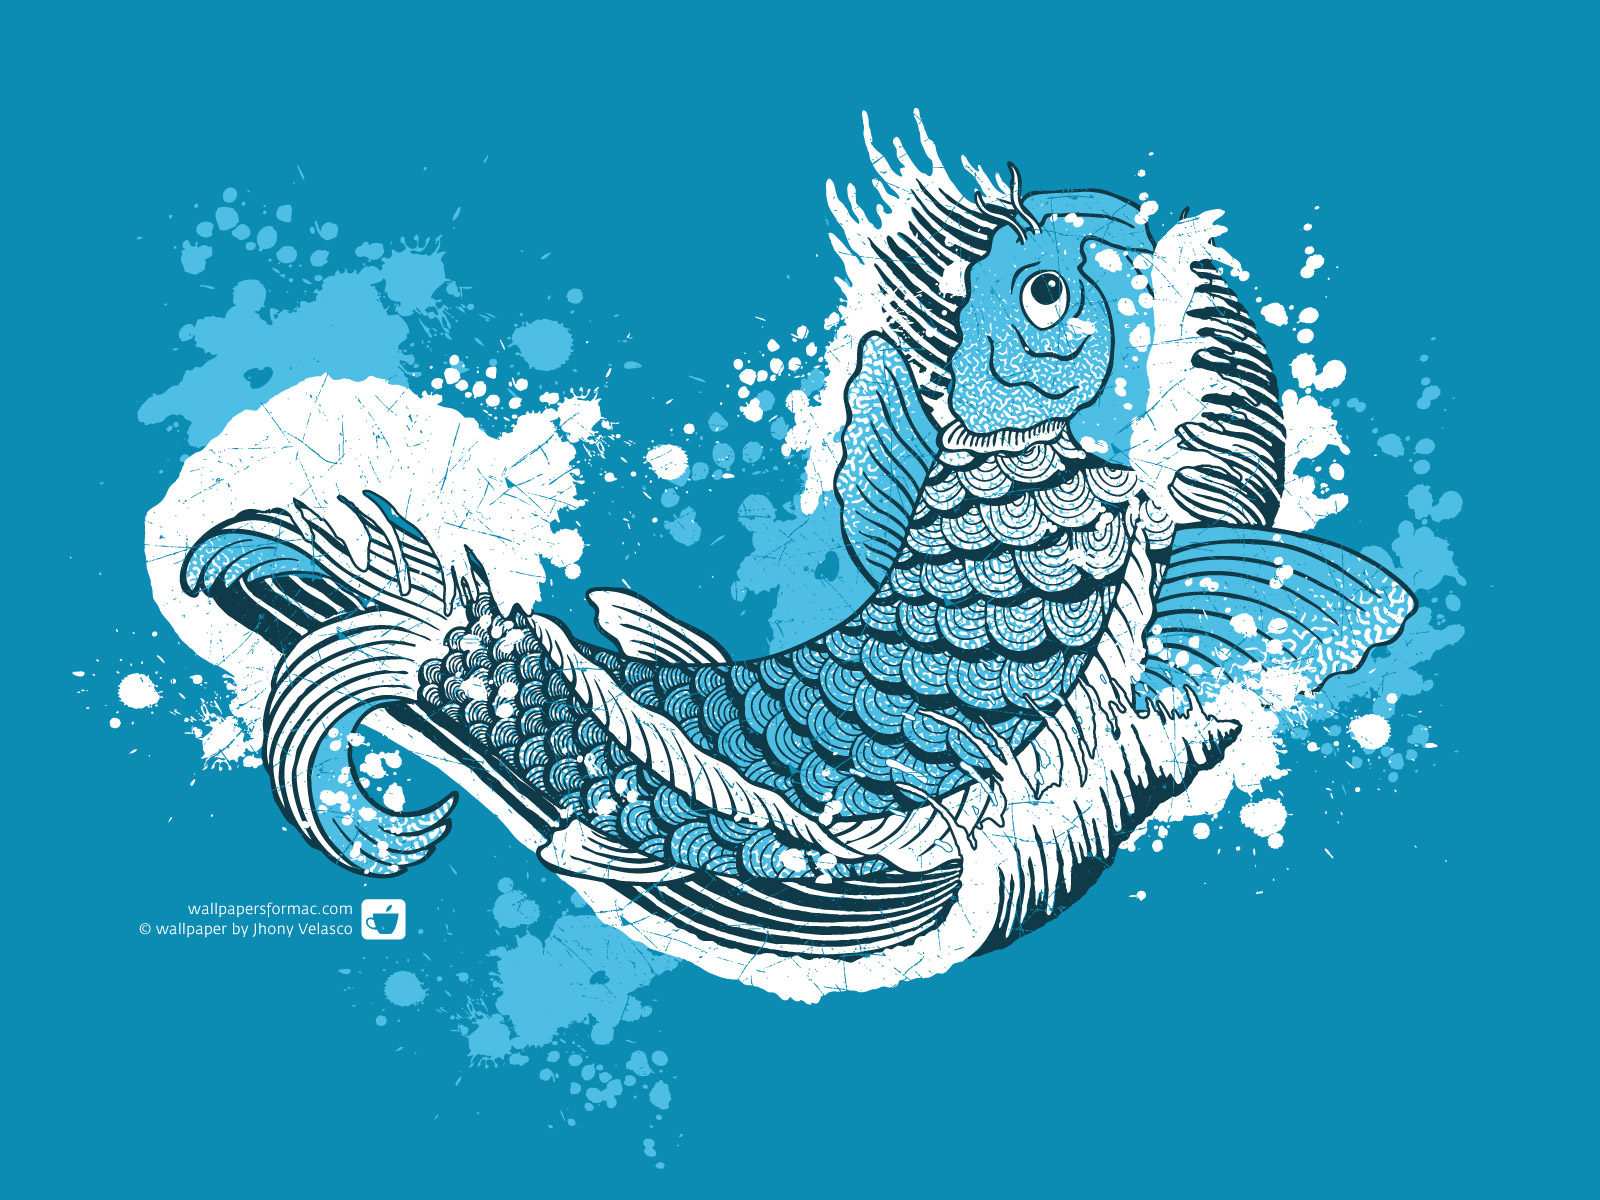 fish wallpaper for walls,illustration,azure,font,water,graphic design